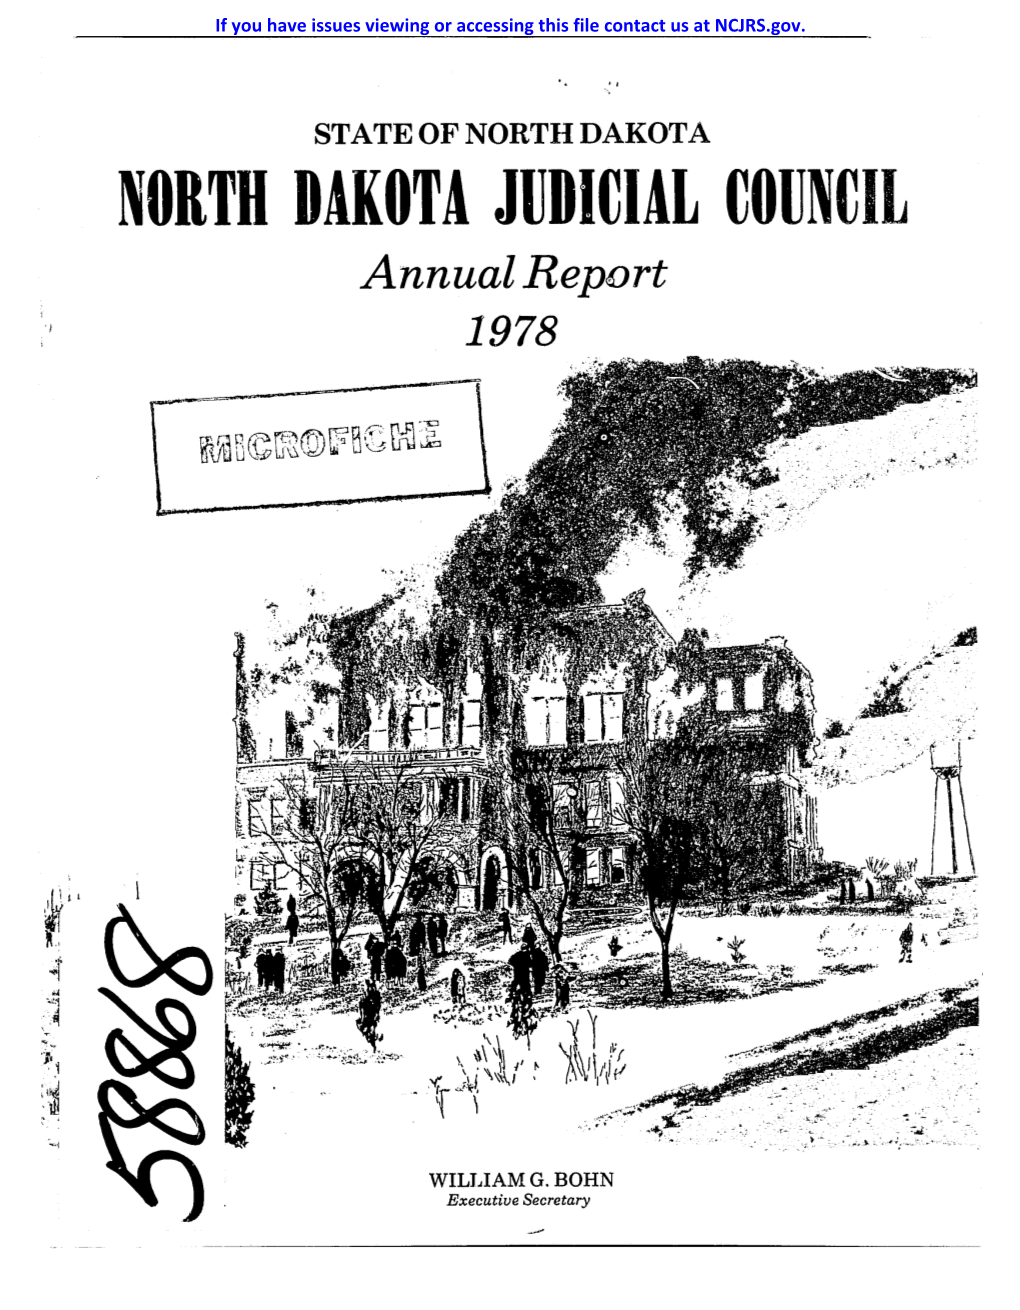 NORTH DAKOTA JUDICIAL COUNCIL Annual Report 1978